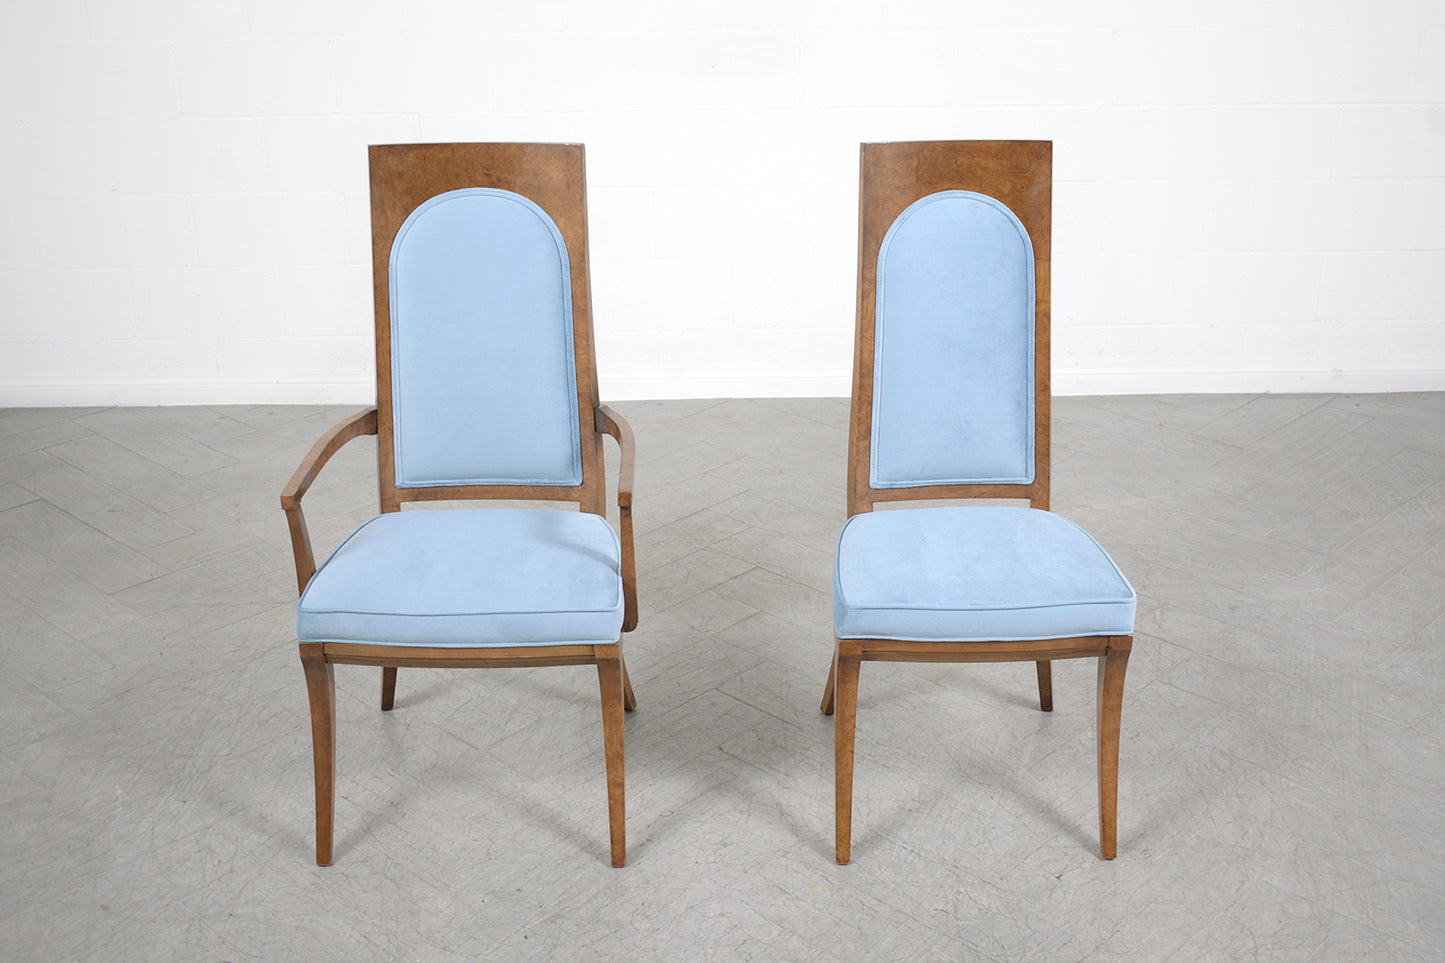 Elegant Set of Mid-Century Modern Mastercraft Dining Chairs